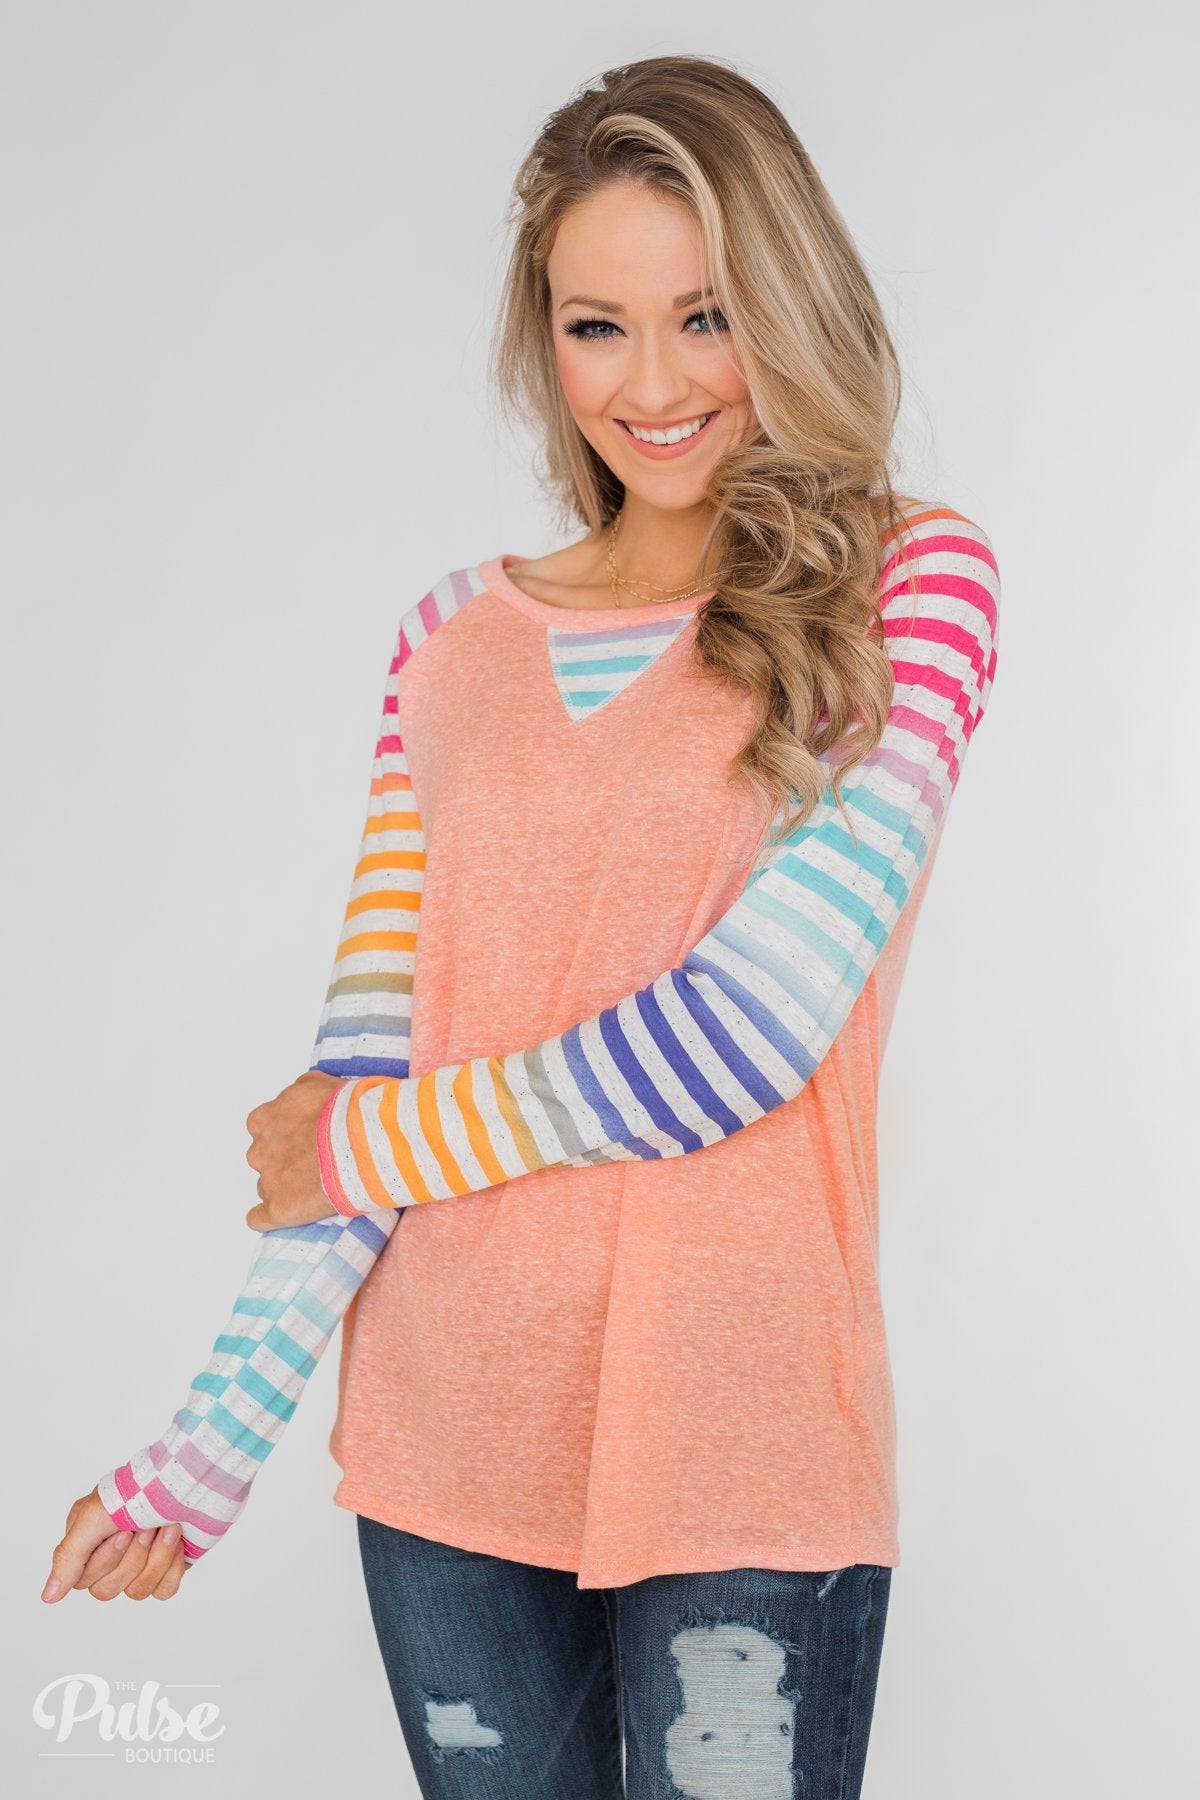 Multi-Colored Striped Sleeve Raglan Top- Peach